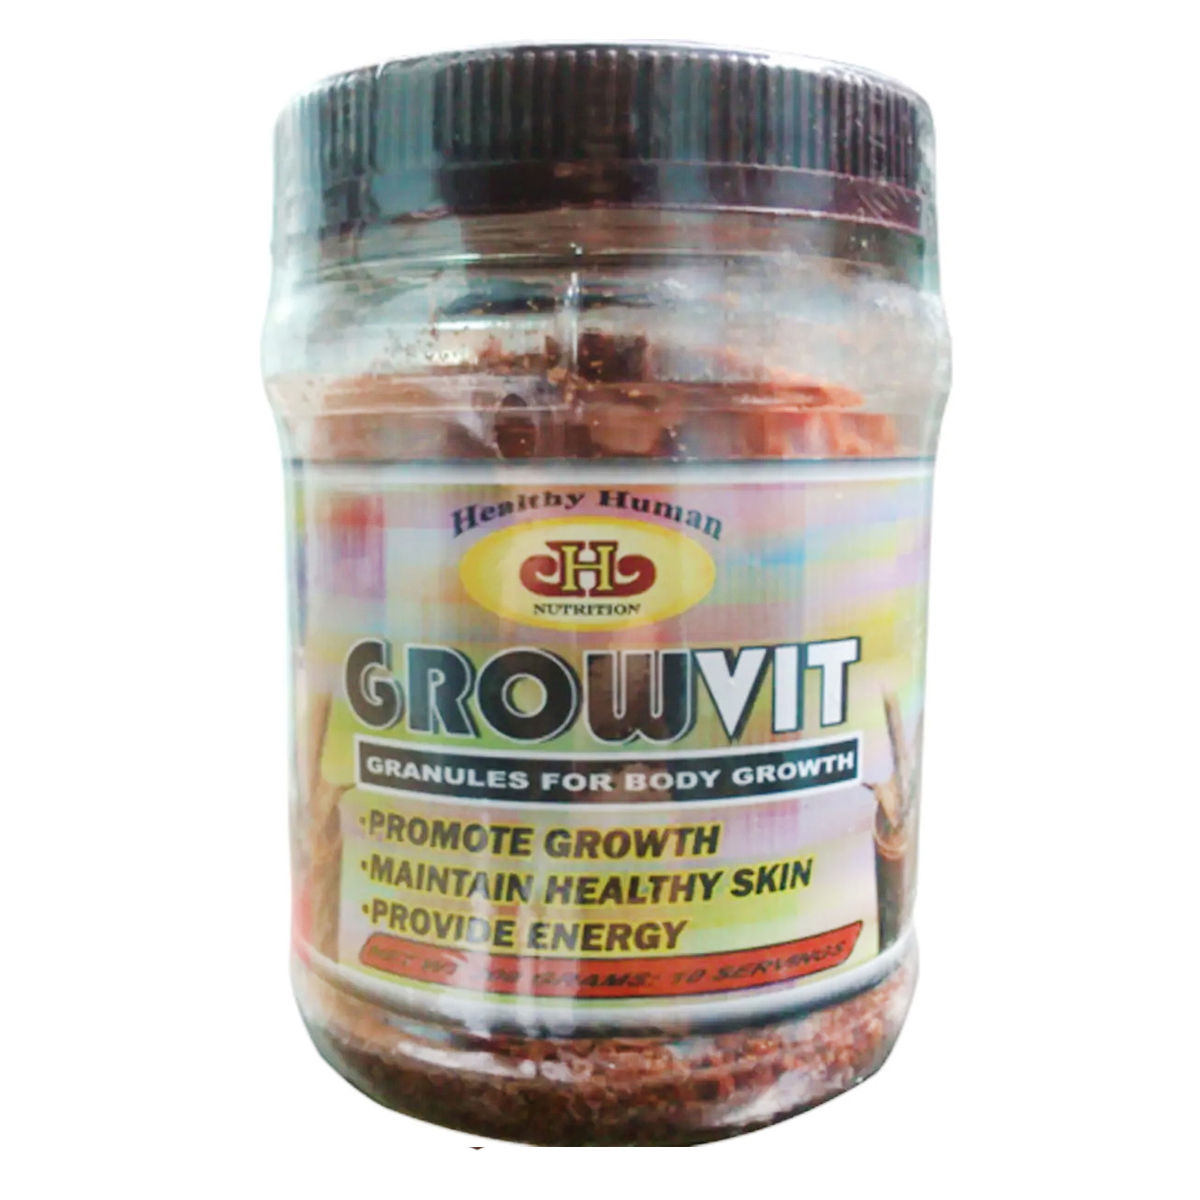 Buy Growvit Body Growth Granules, 200 gm Online